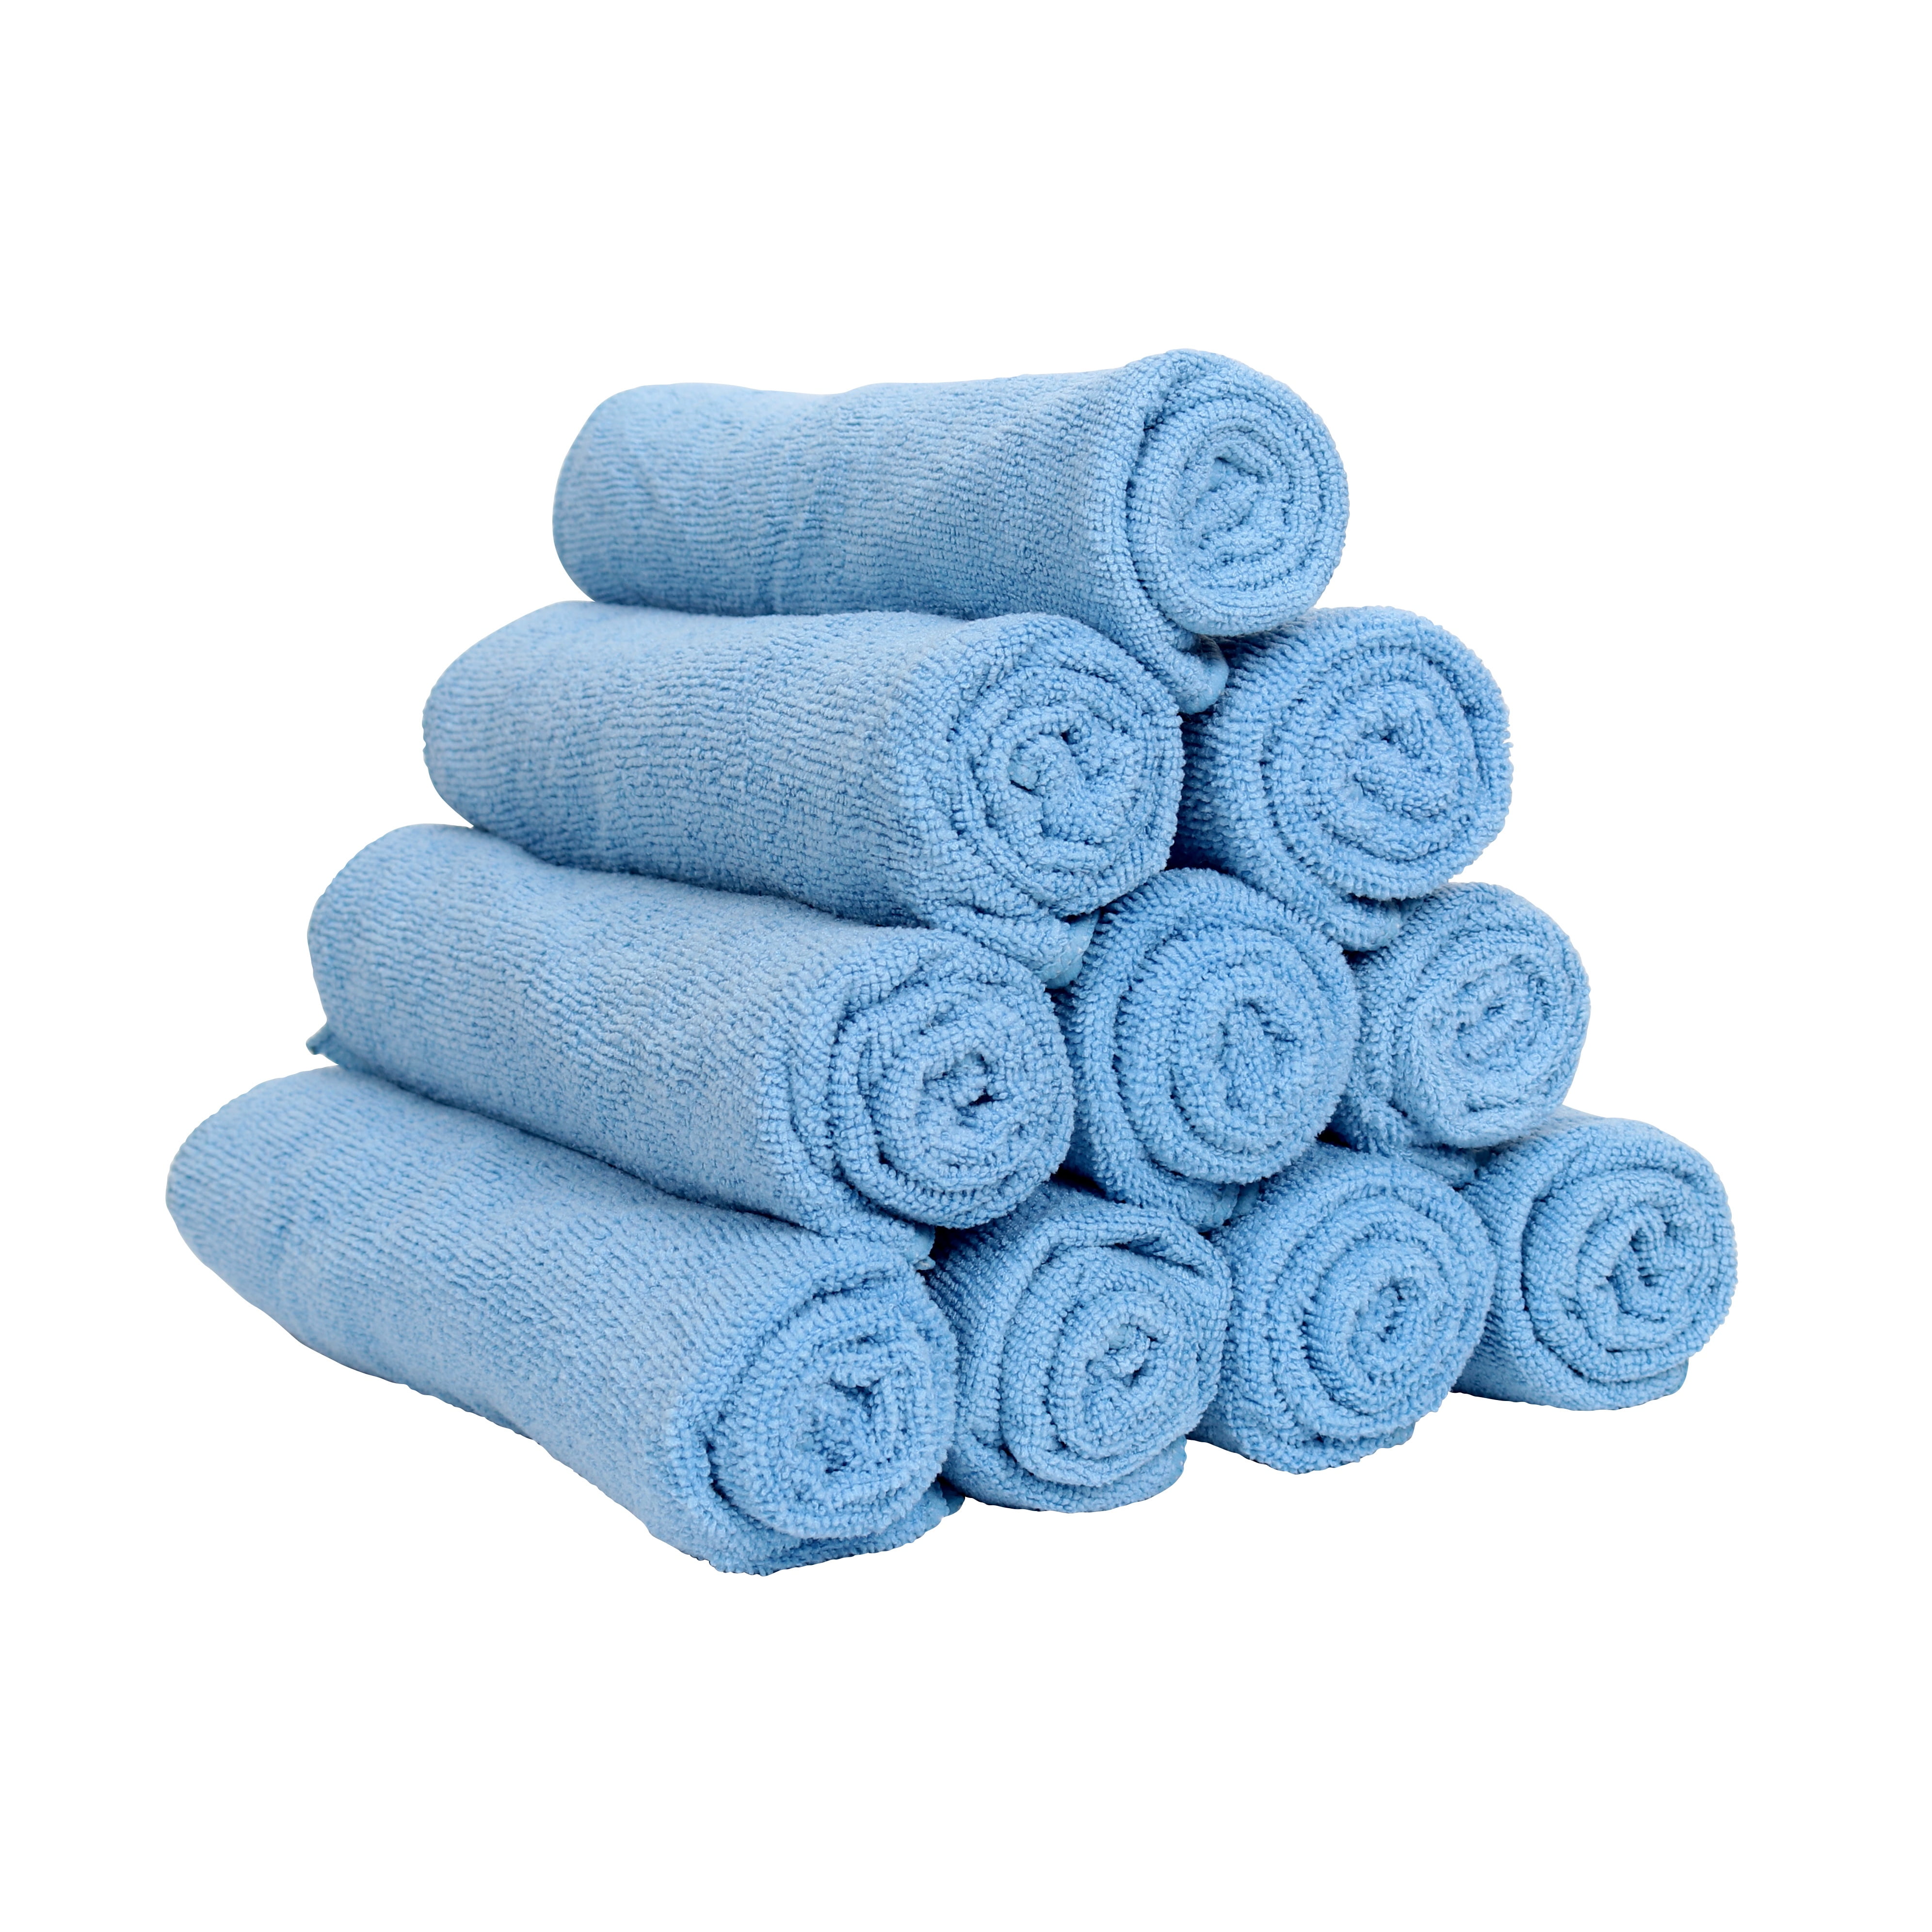 Arkwright 12 Pack of Microfiber Hand Towels, 15 x 24, Blue, Multi-Purpose